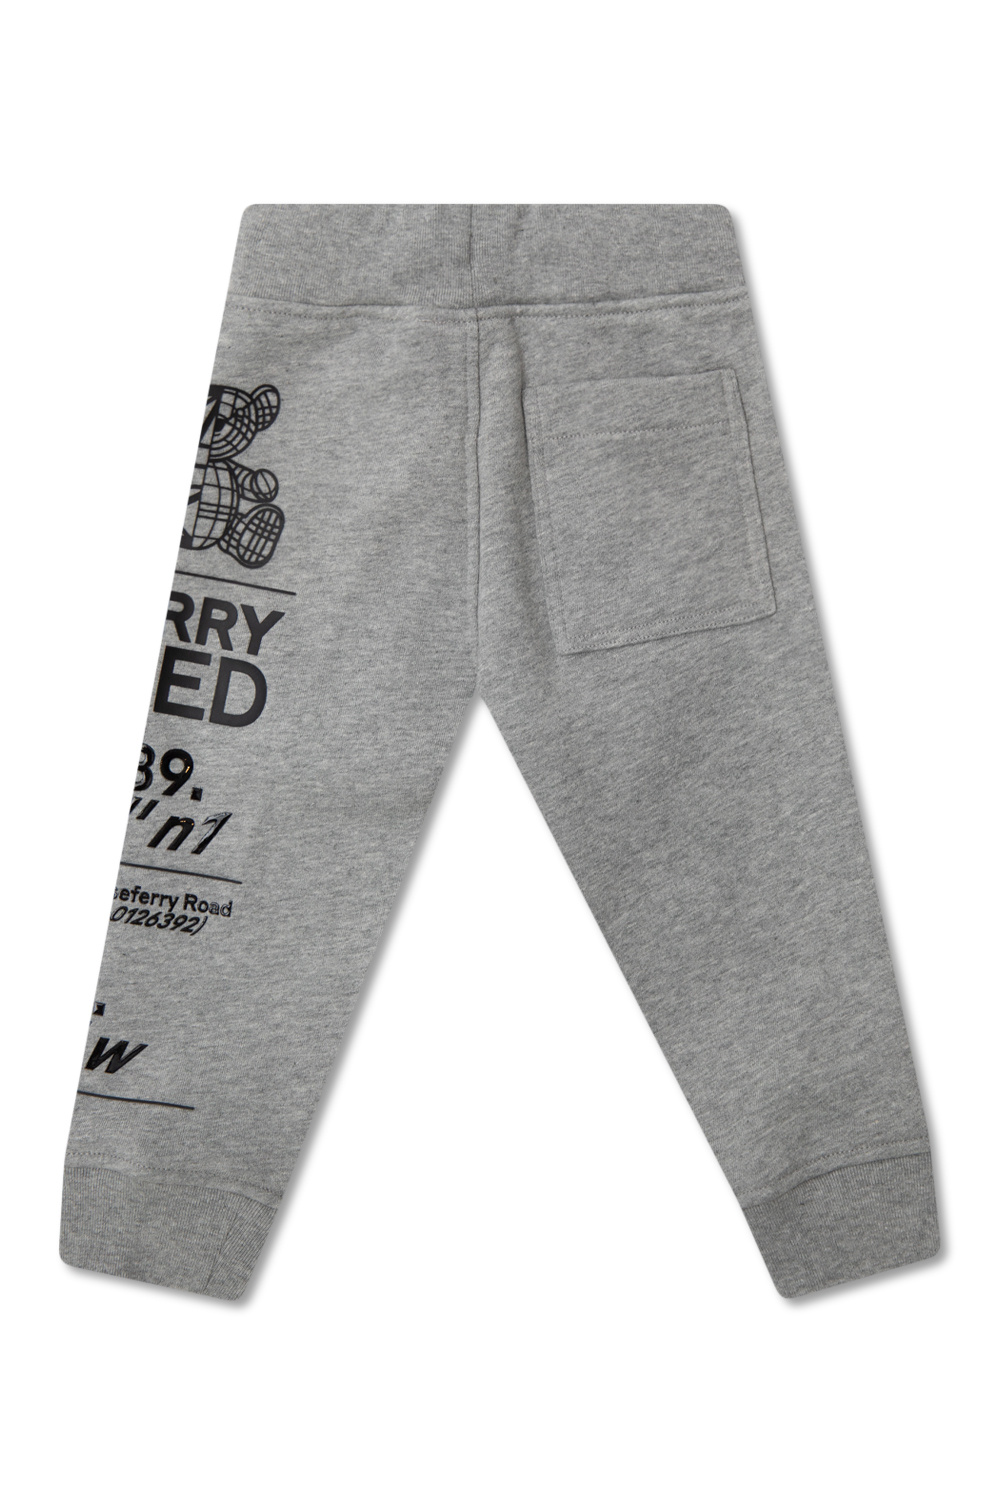 burberry shirt Kids ‘Joel’ sweatpants